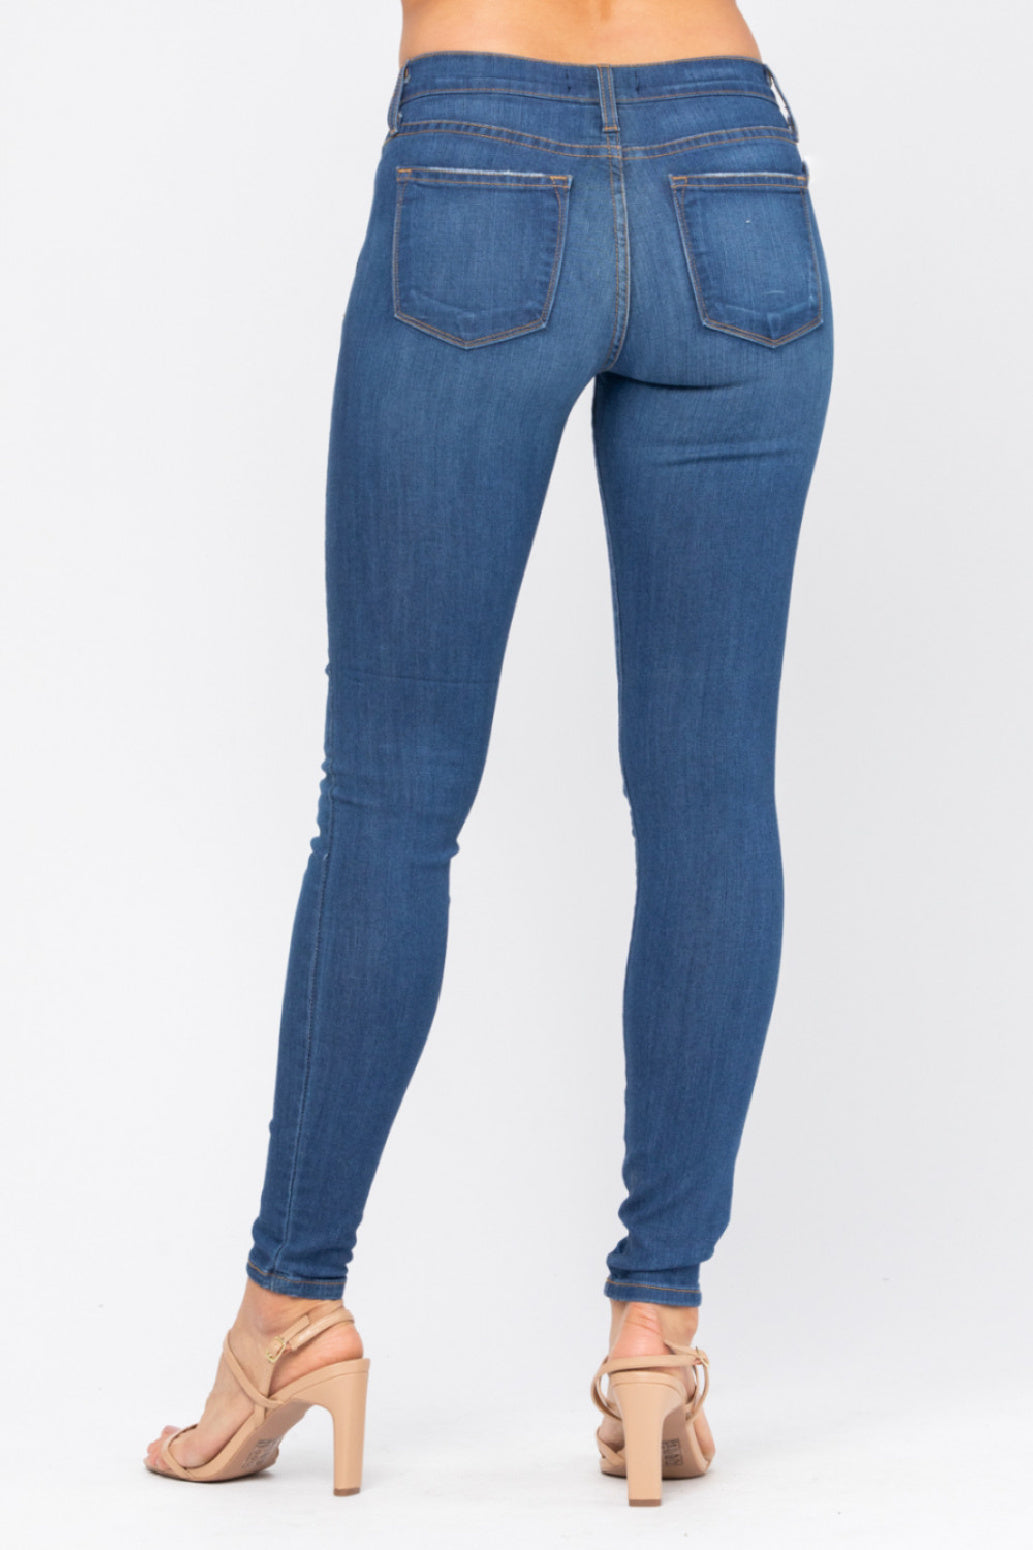 Judy Blue Handsand Medium Wash Rayon Skinny Jeans Style 8390